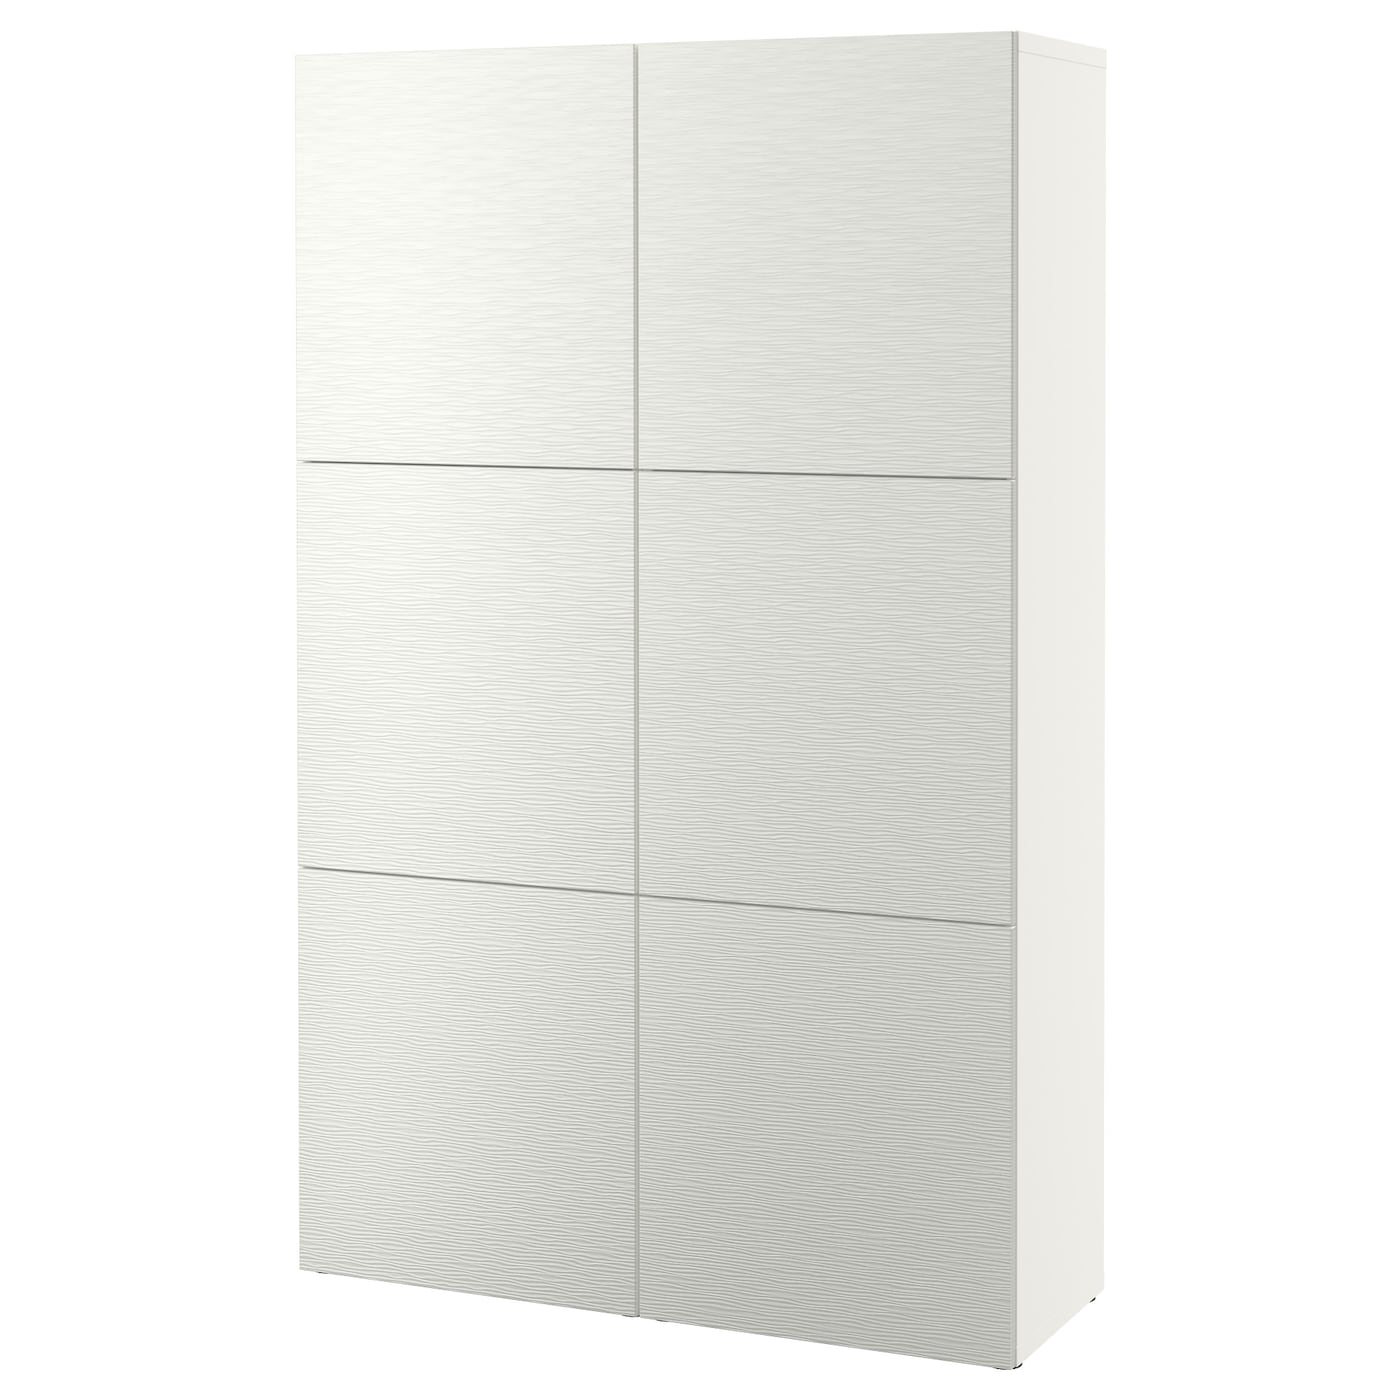 Комбинация для хранения - BESTÅ/ BESTА IKEA/ БЕСТА/БЕСТО ИКЕА, 193х120 см, белый